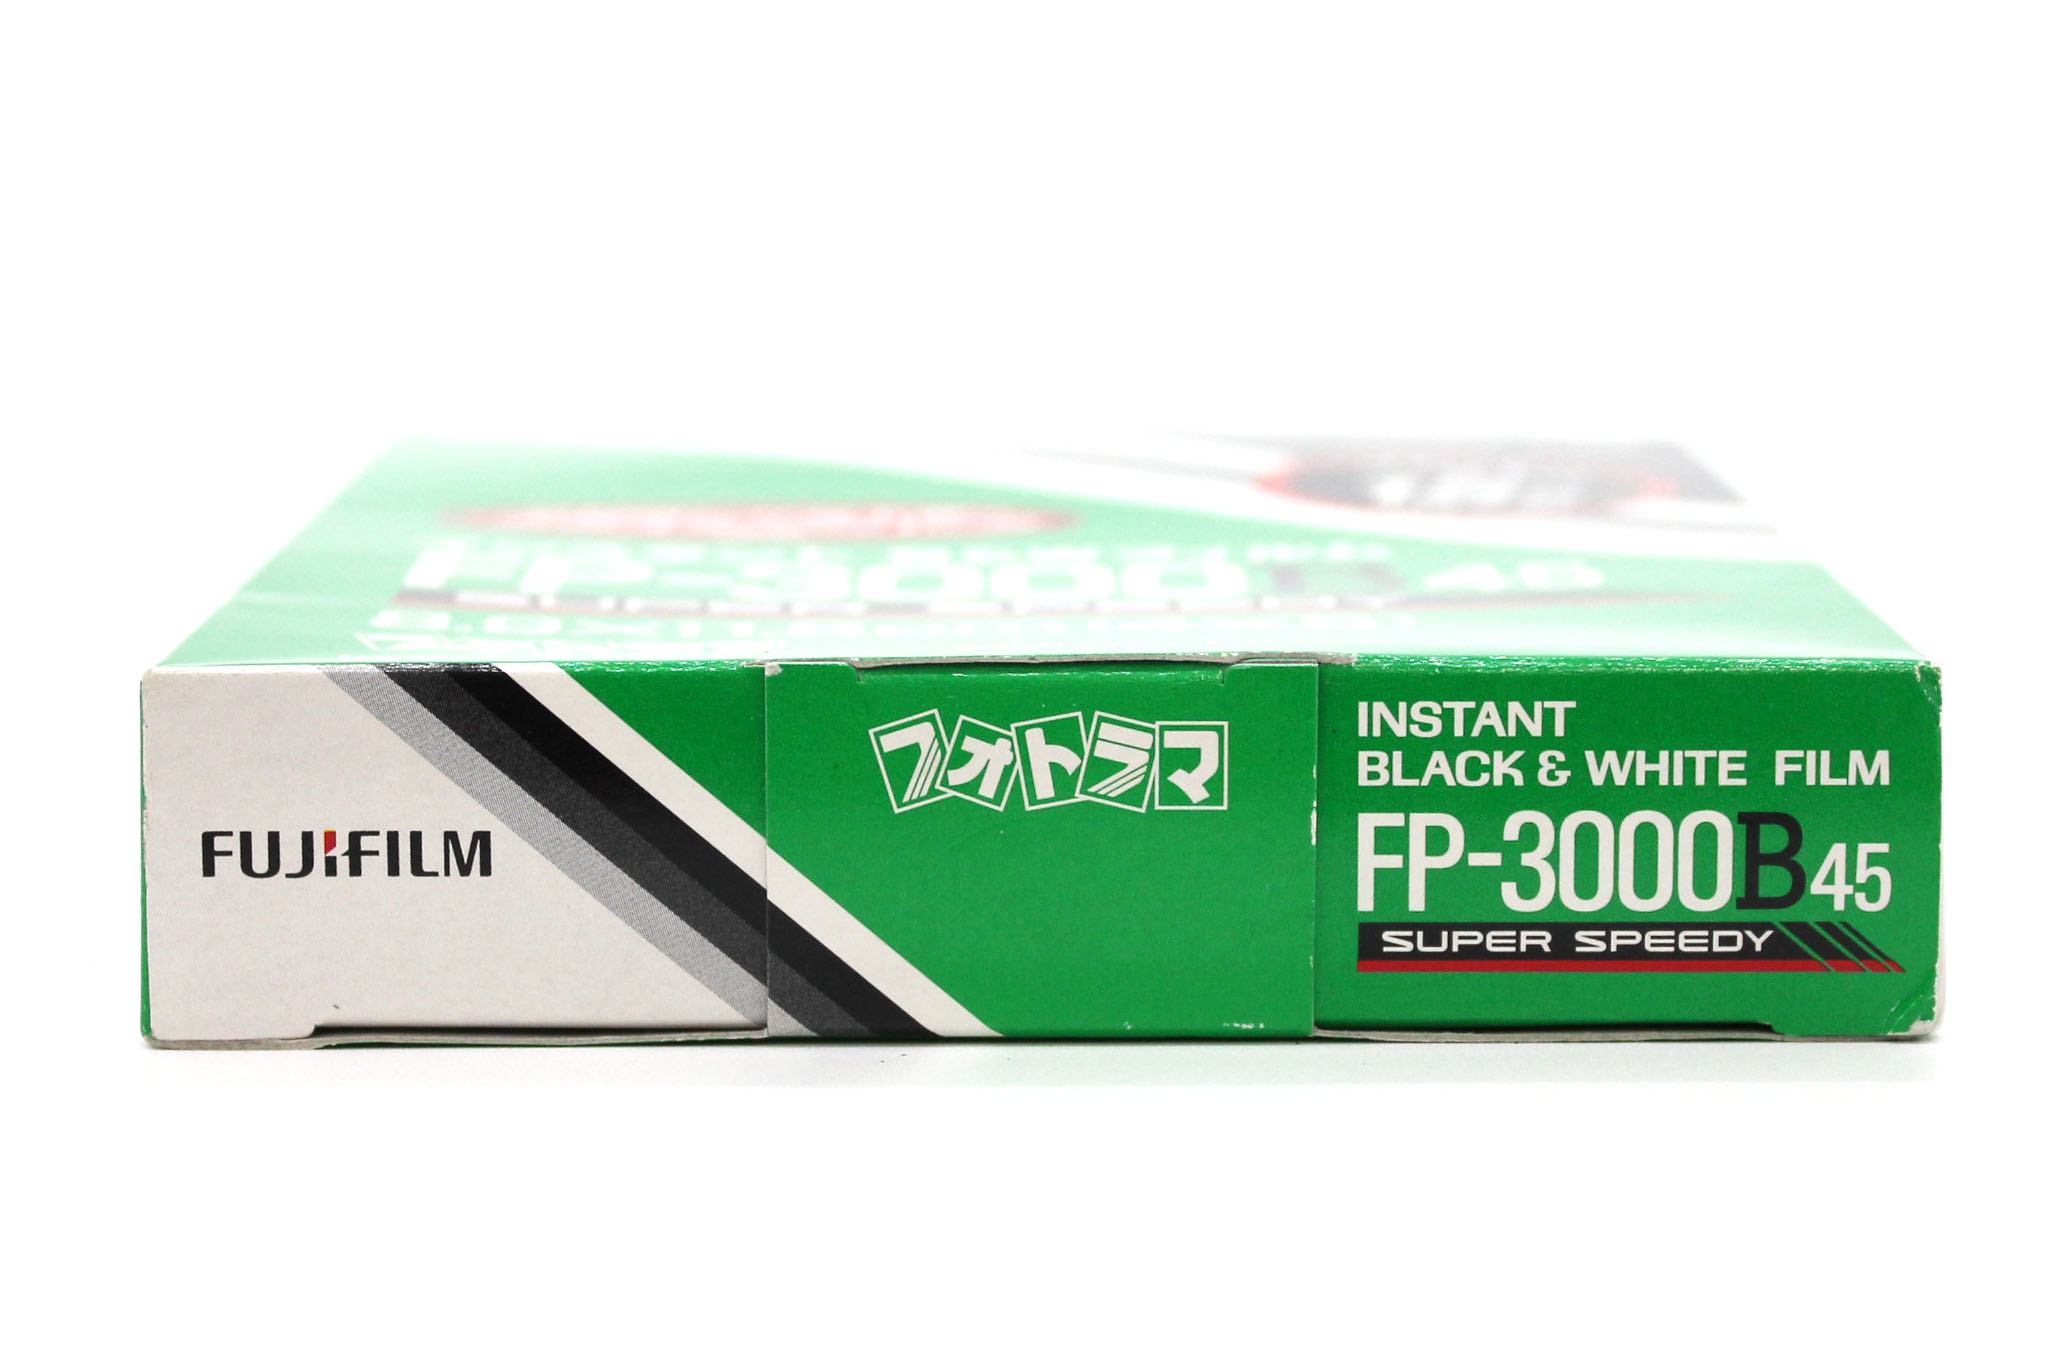  Fuji Fujifilm FP-3000B45 4x5 8.9x11.8cm Instant Black & White Film (EXP 10/2010) from Japan Photo 5